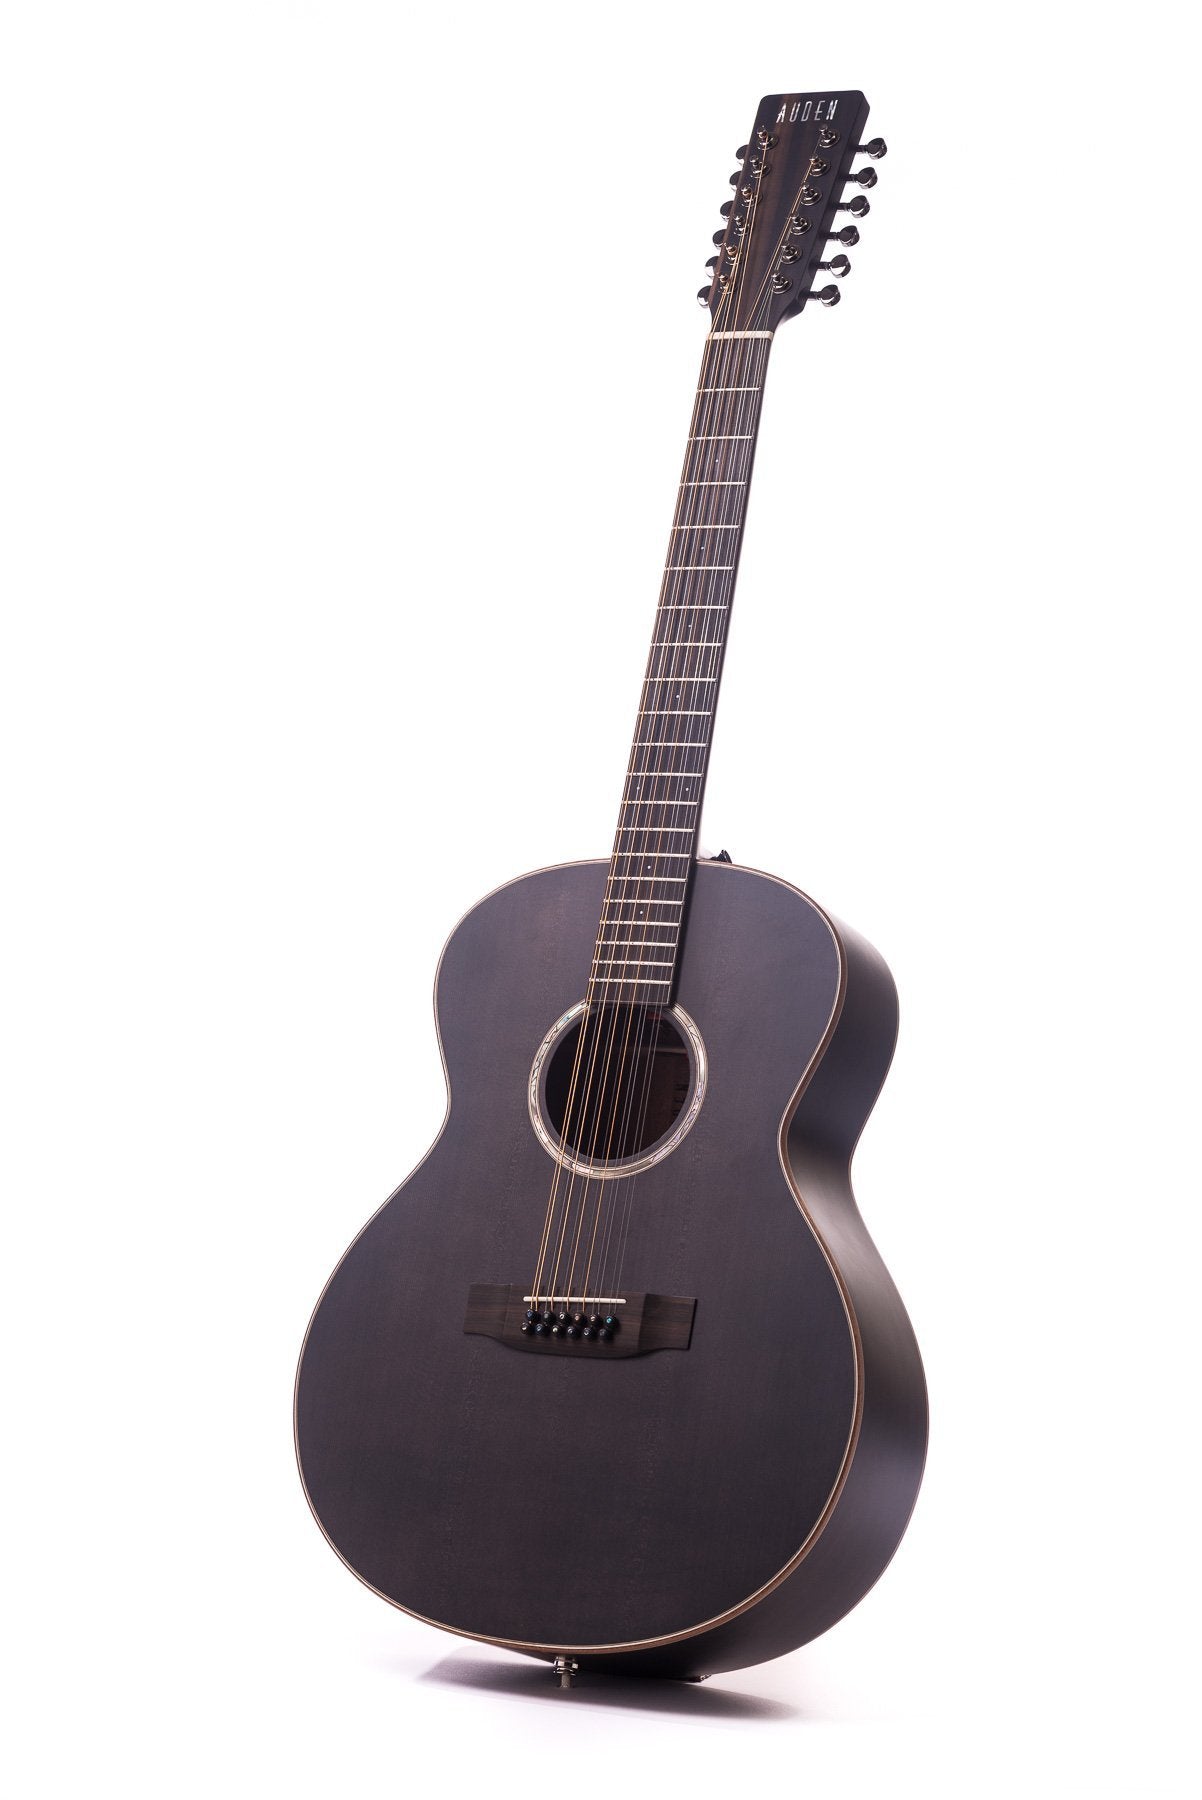 Auden Smokehouse Austin 12 String., Electro Acoustic Guitar for sale at Richards Guitars.